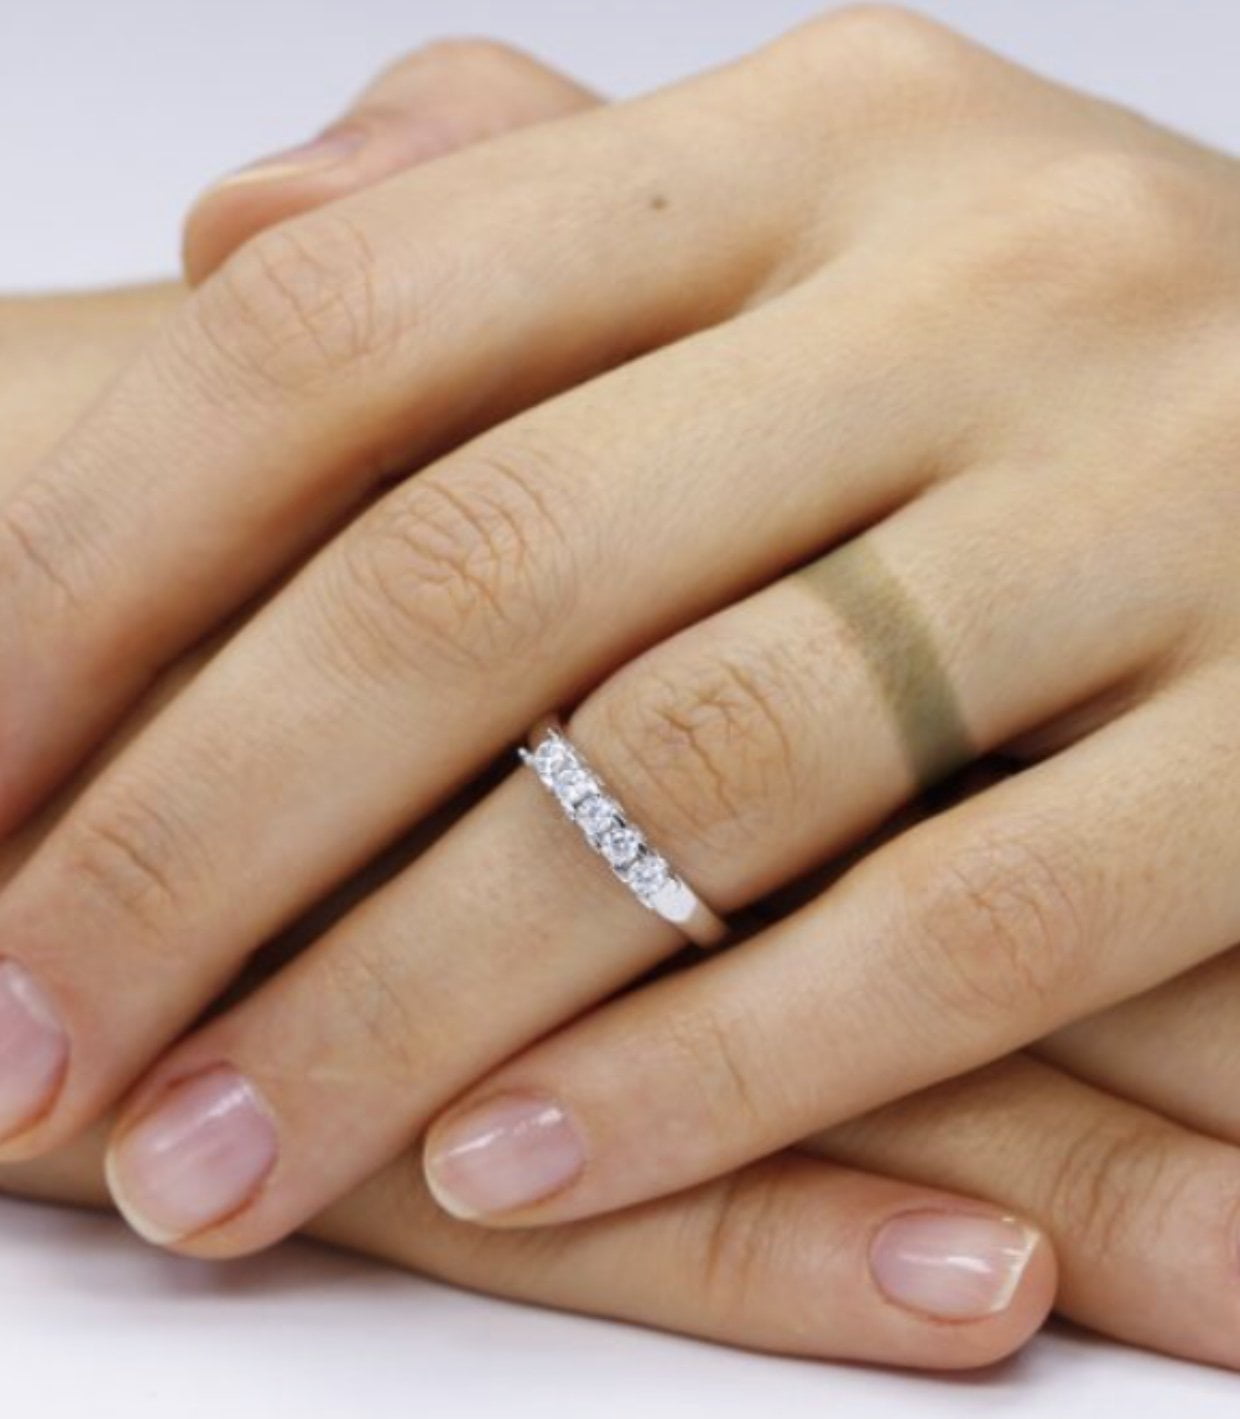 Почему чернеет золотое кольцо на руке. Отпечаток от кольца на пальце. След от обручального кольца на пальце. Почерневшее кольцо.